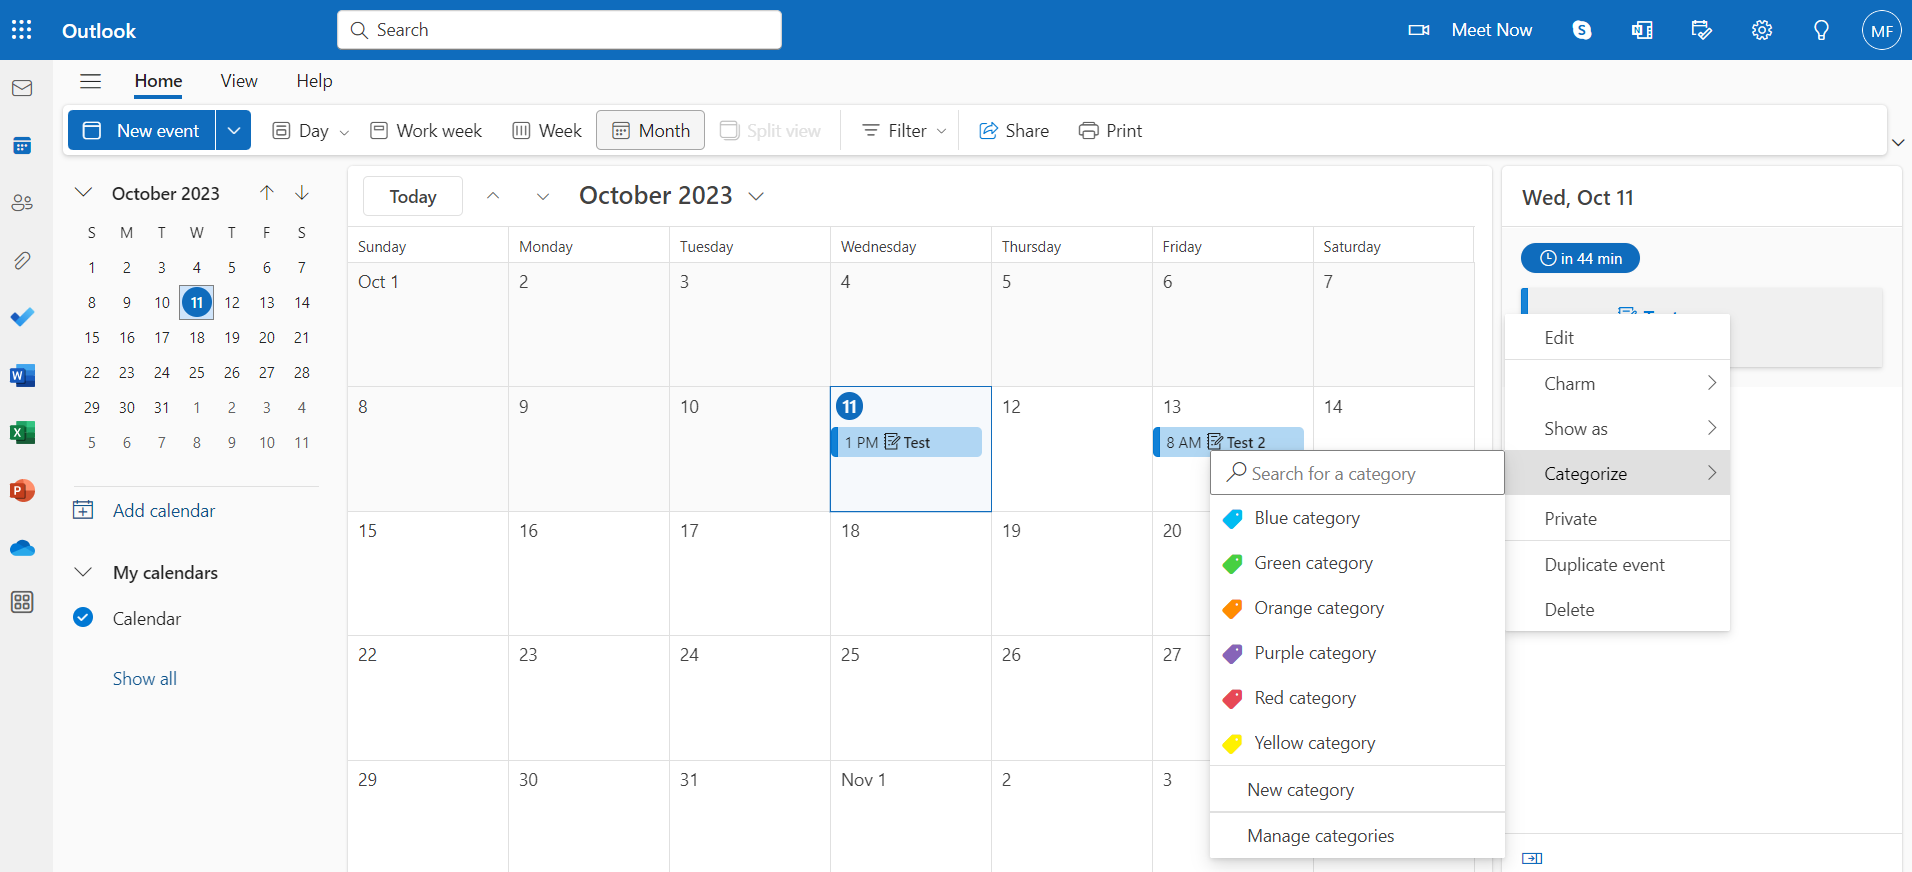 Categorize in Outlook calendar